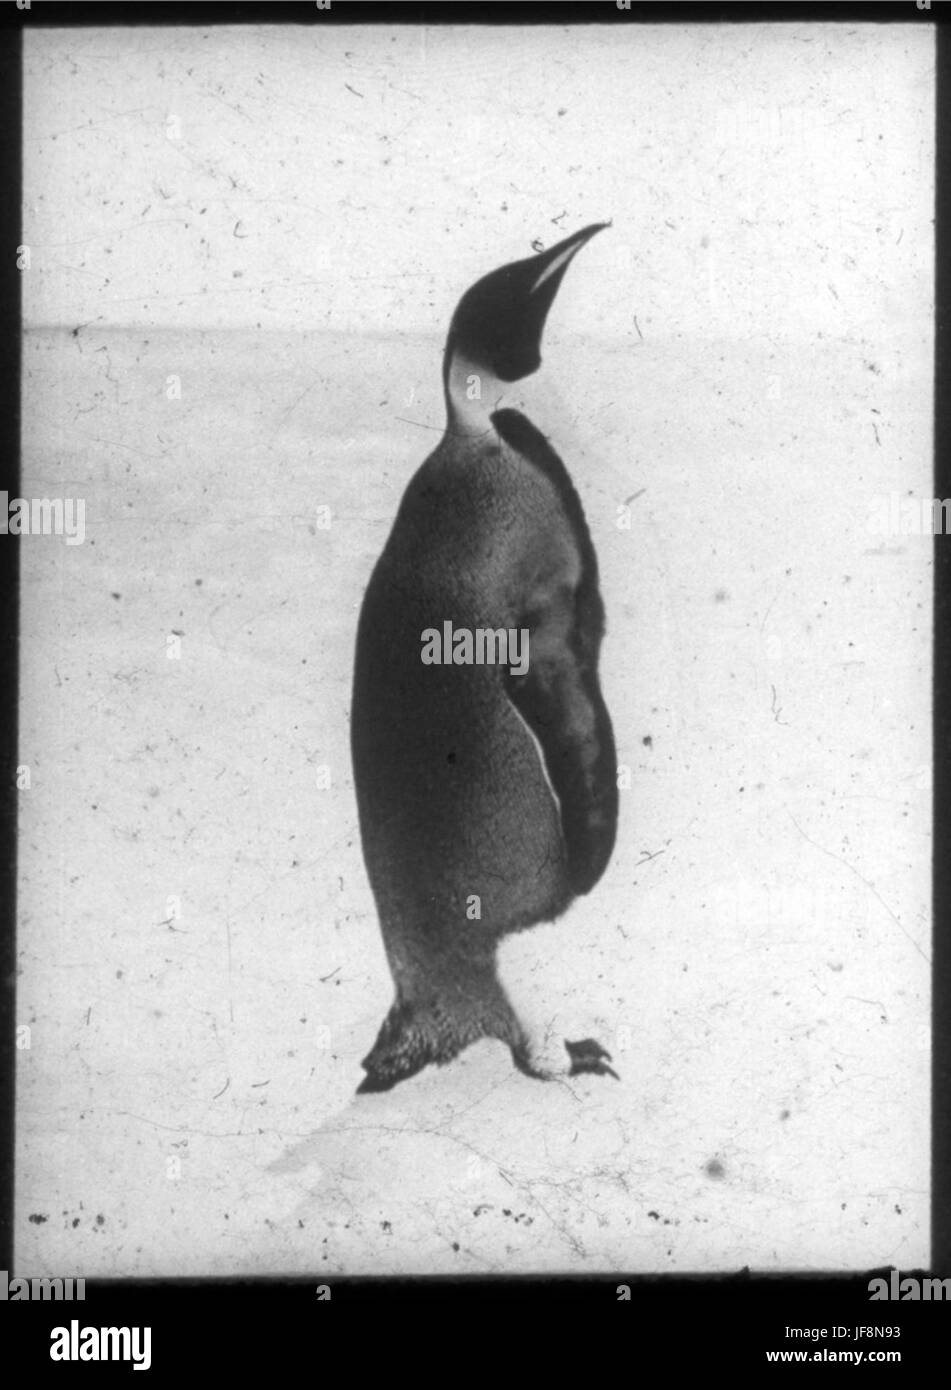 Un pingouin 34524514836 o Banque D'Images